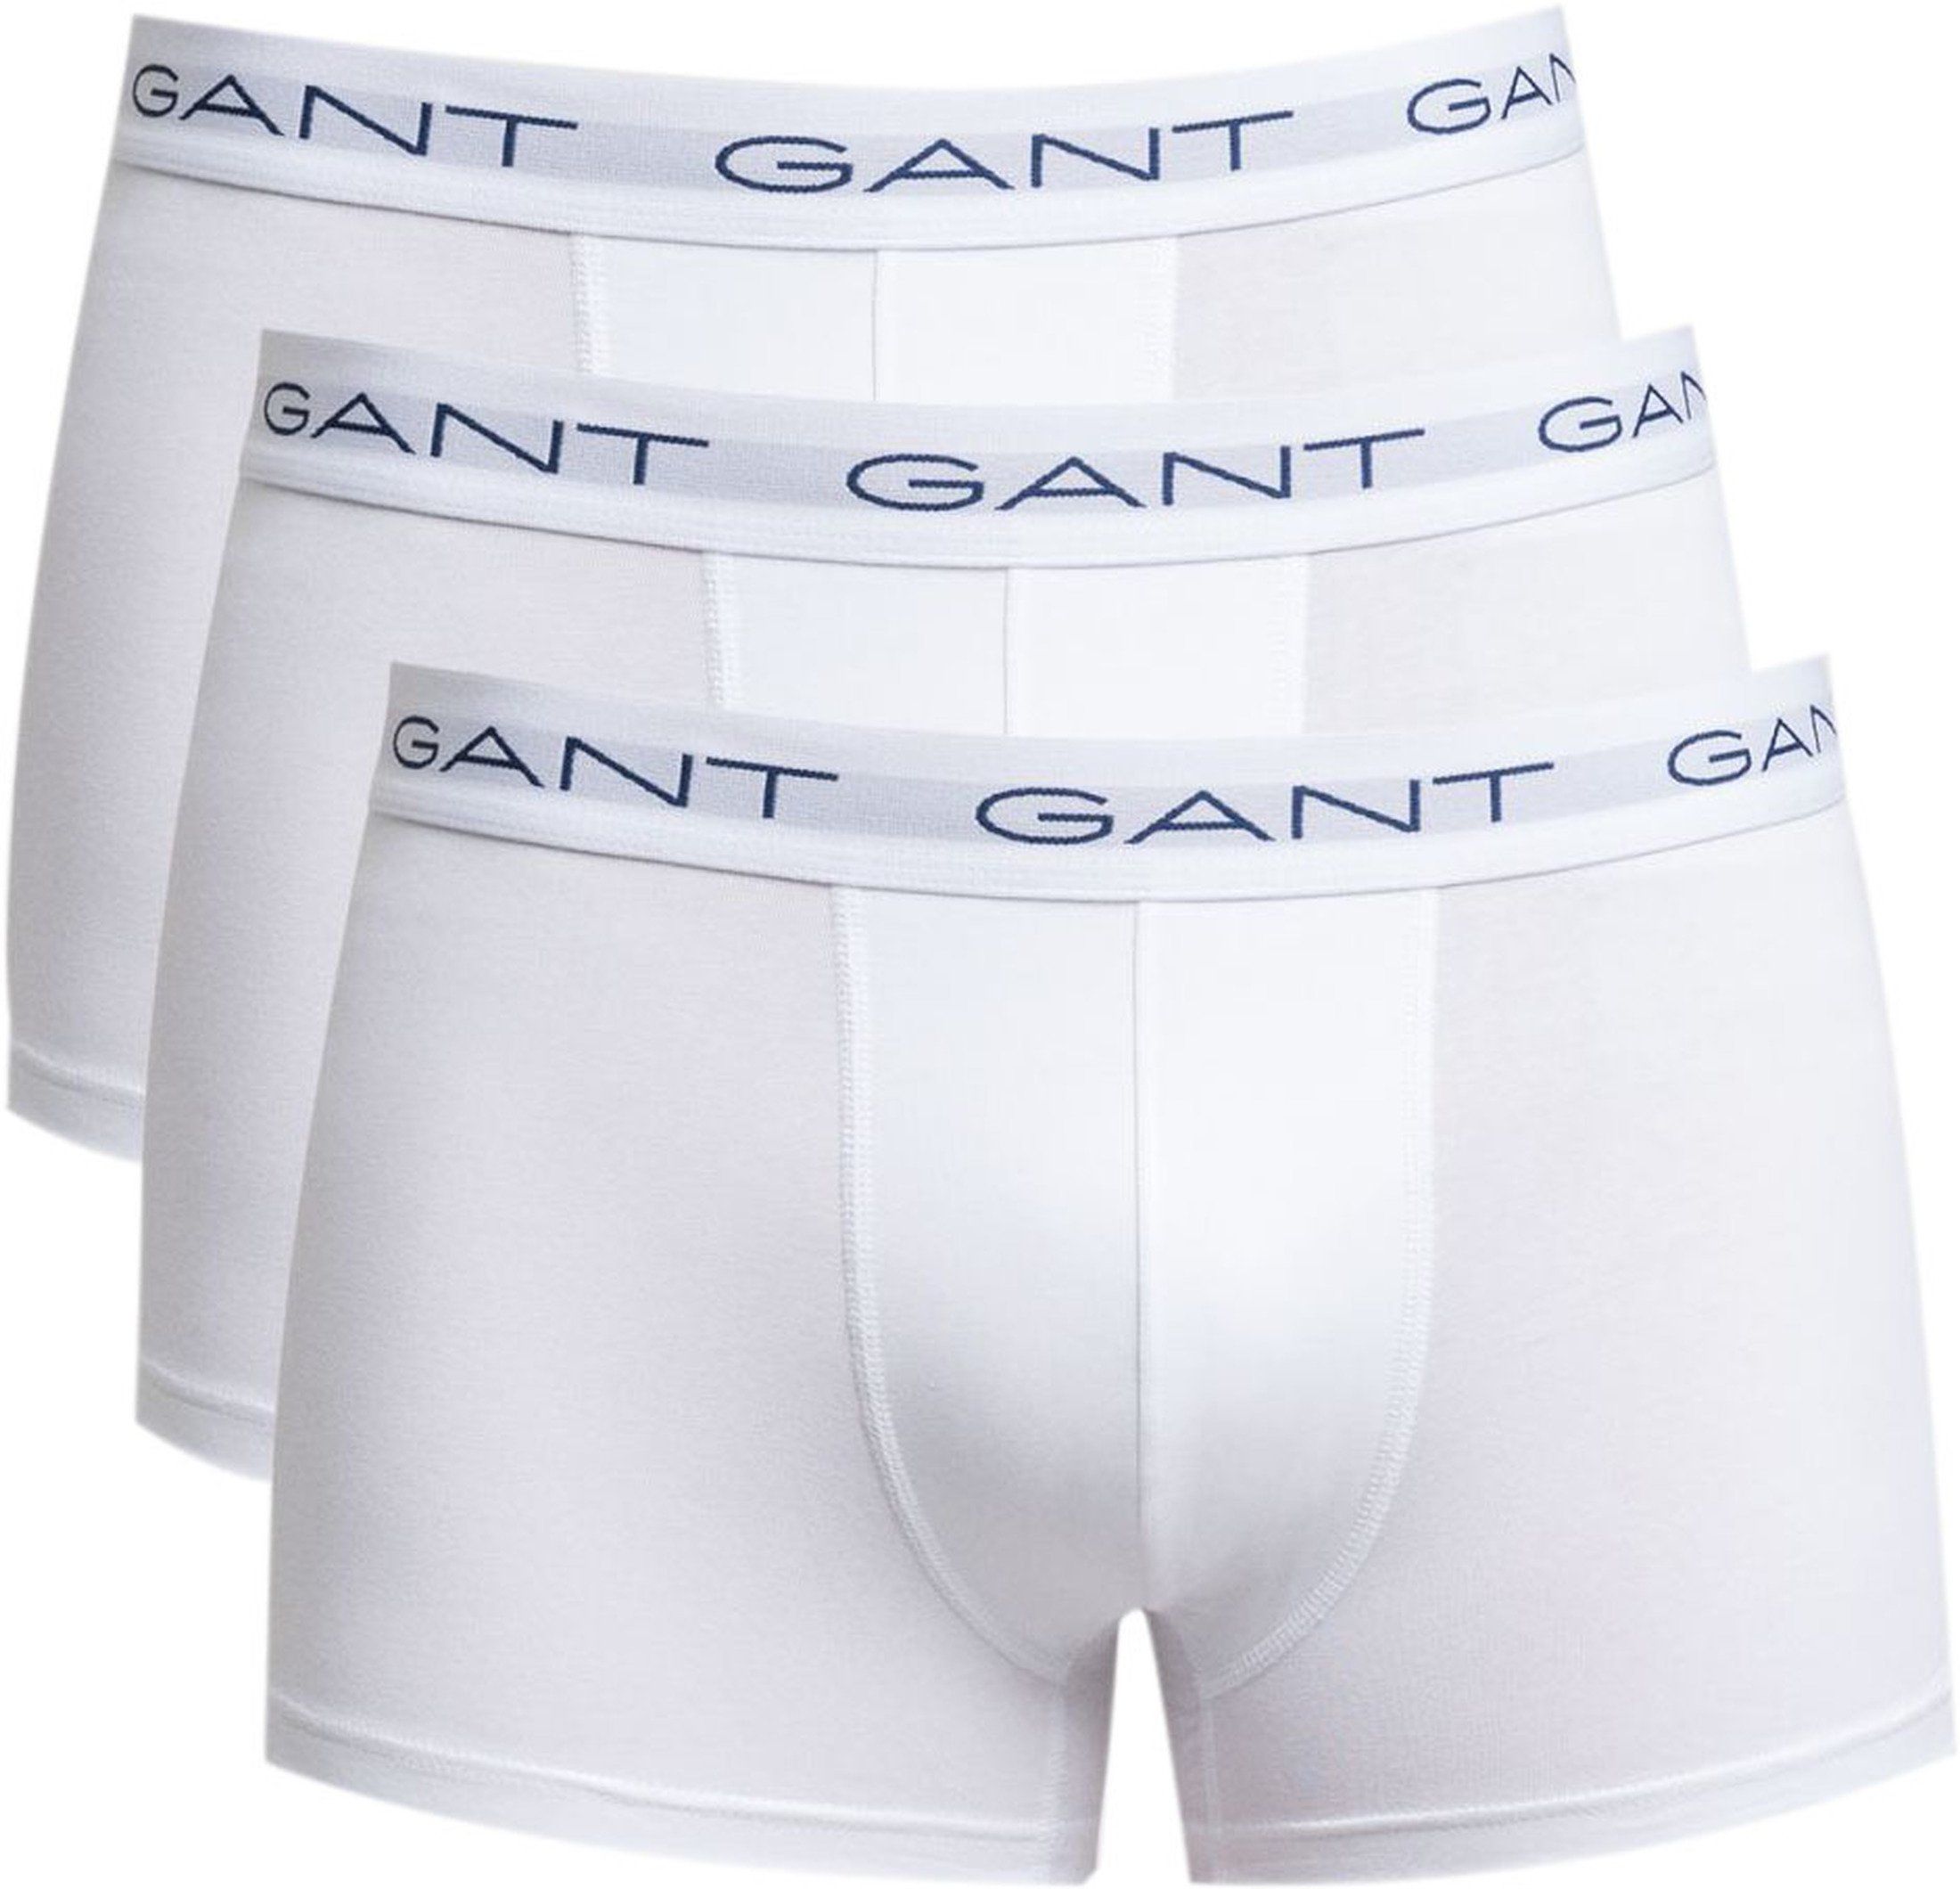 Gant Boxers 3-Pack White size L